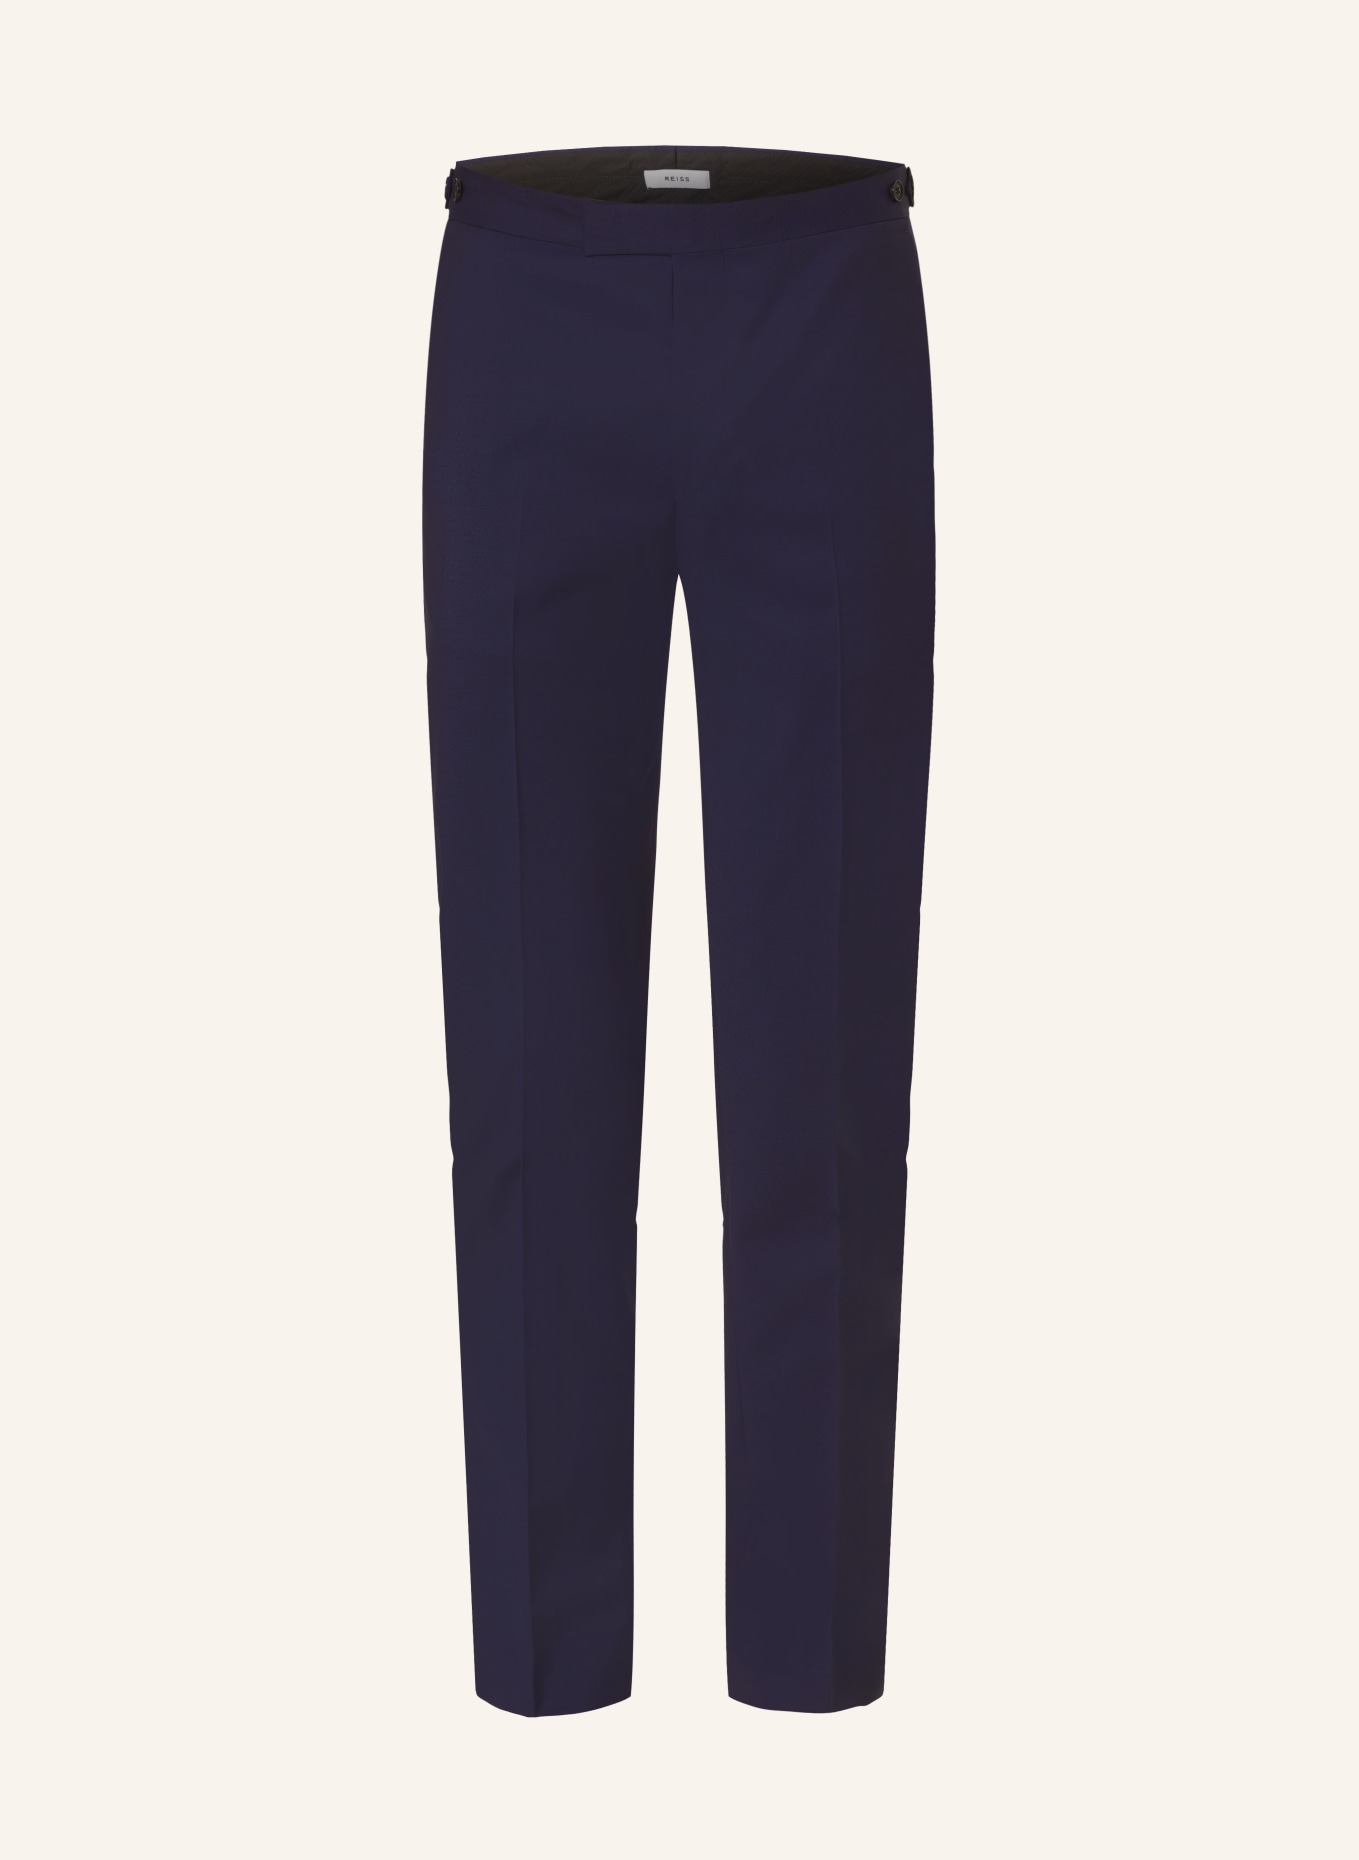 REISS Anzughose DESTINY Slim Fit, Farbe: 30 navy (Bild 1)